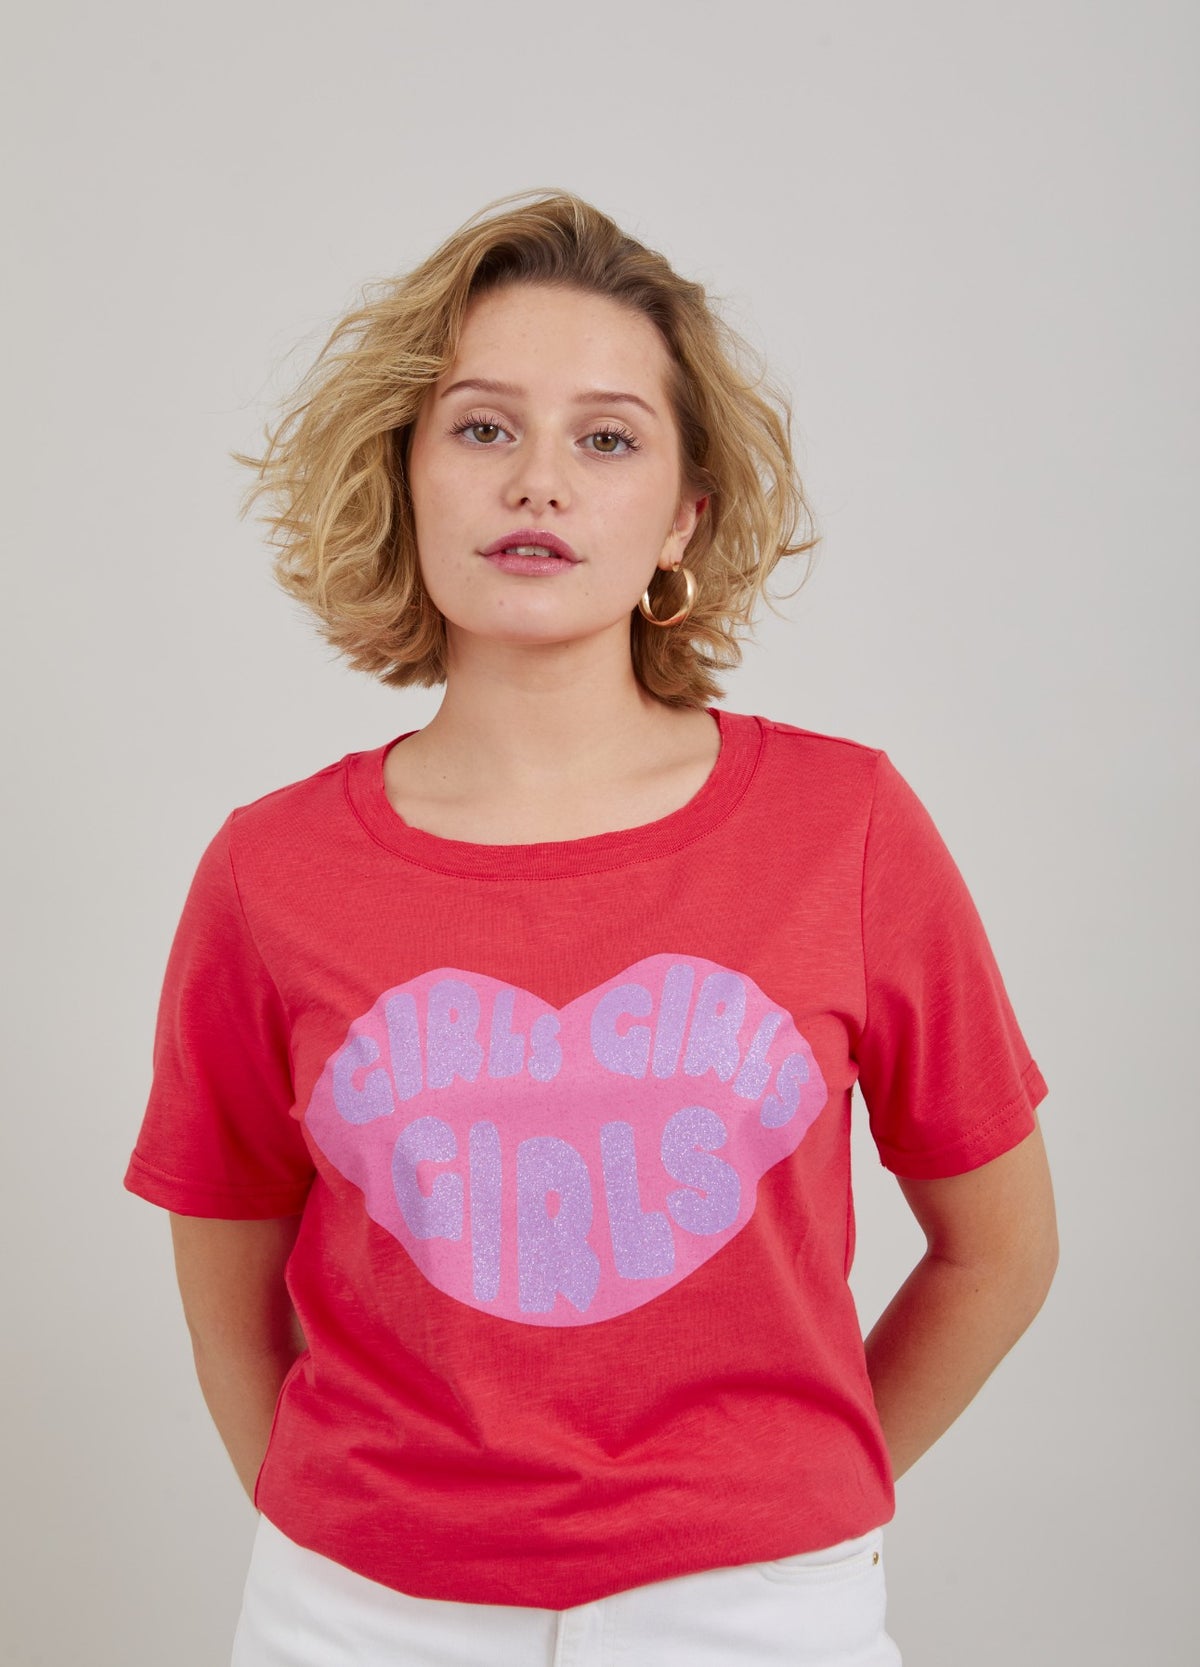 Coster Copenhagen Coral Pink Lips Print T-Shirt, 232-1250